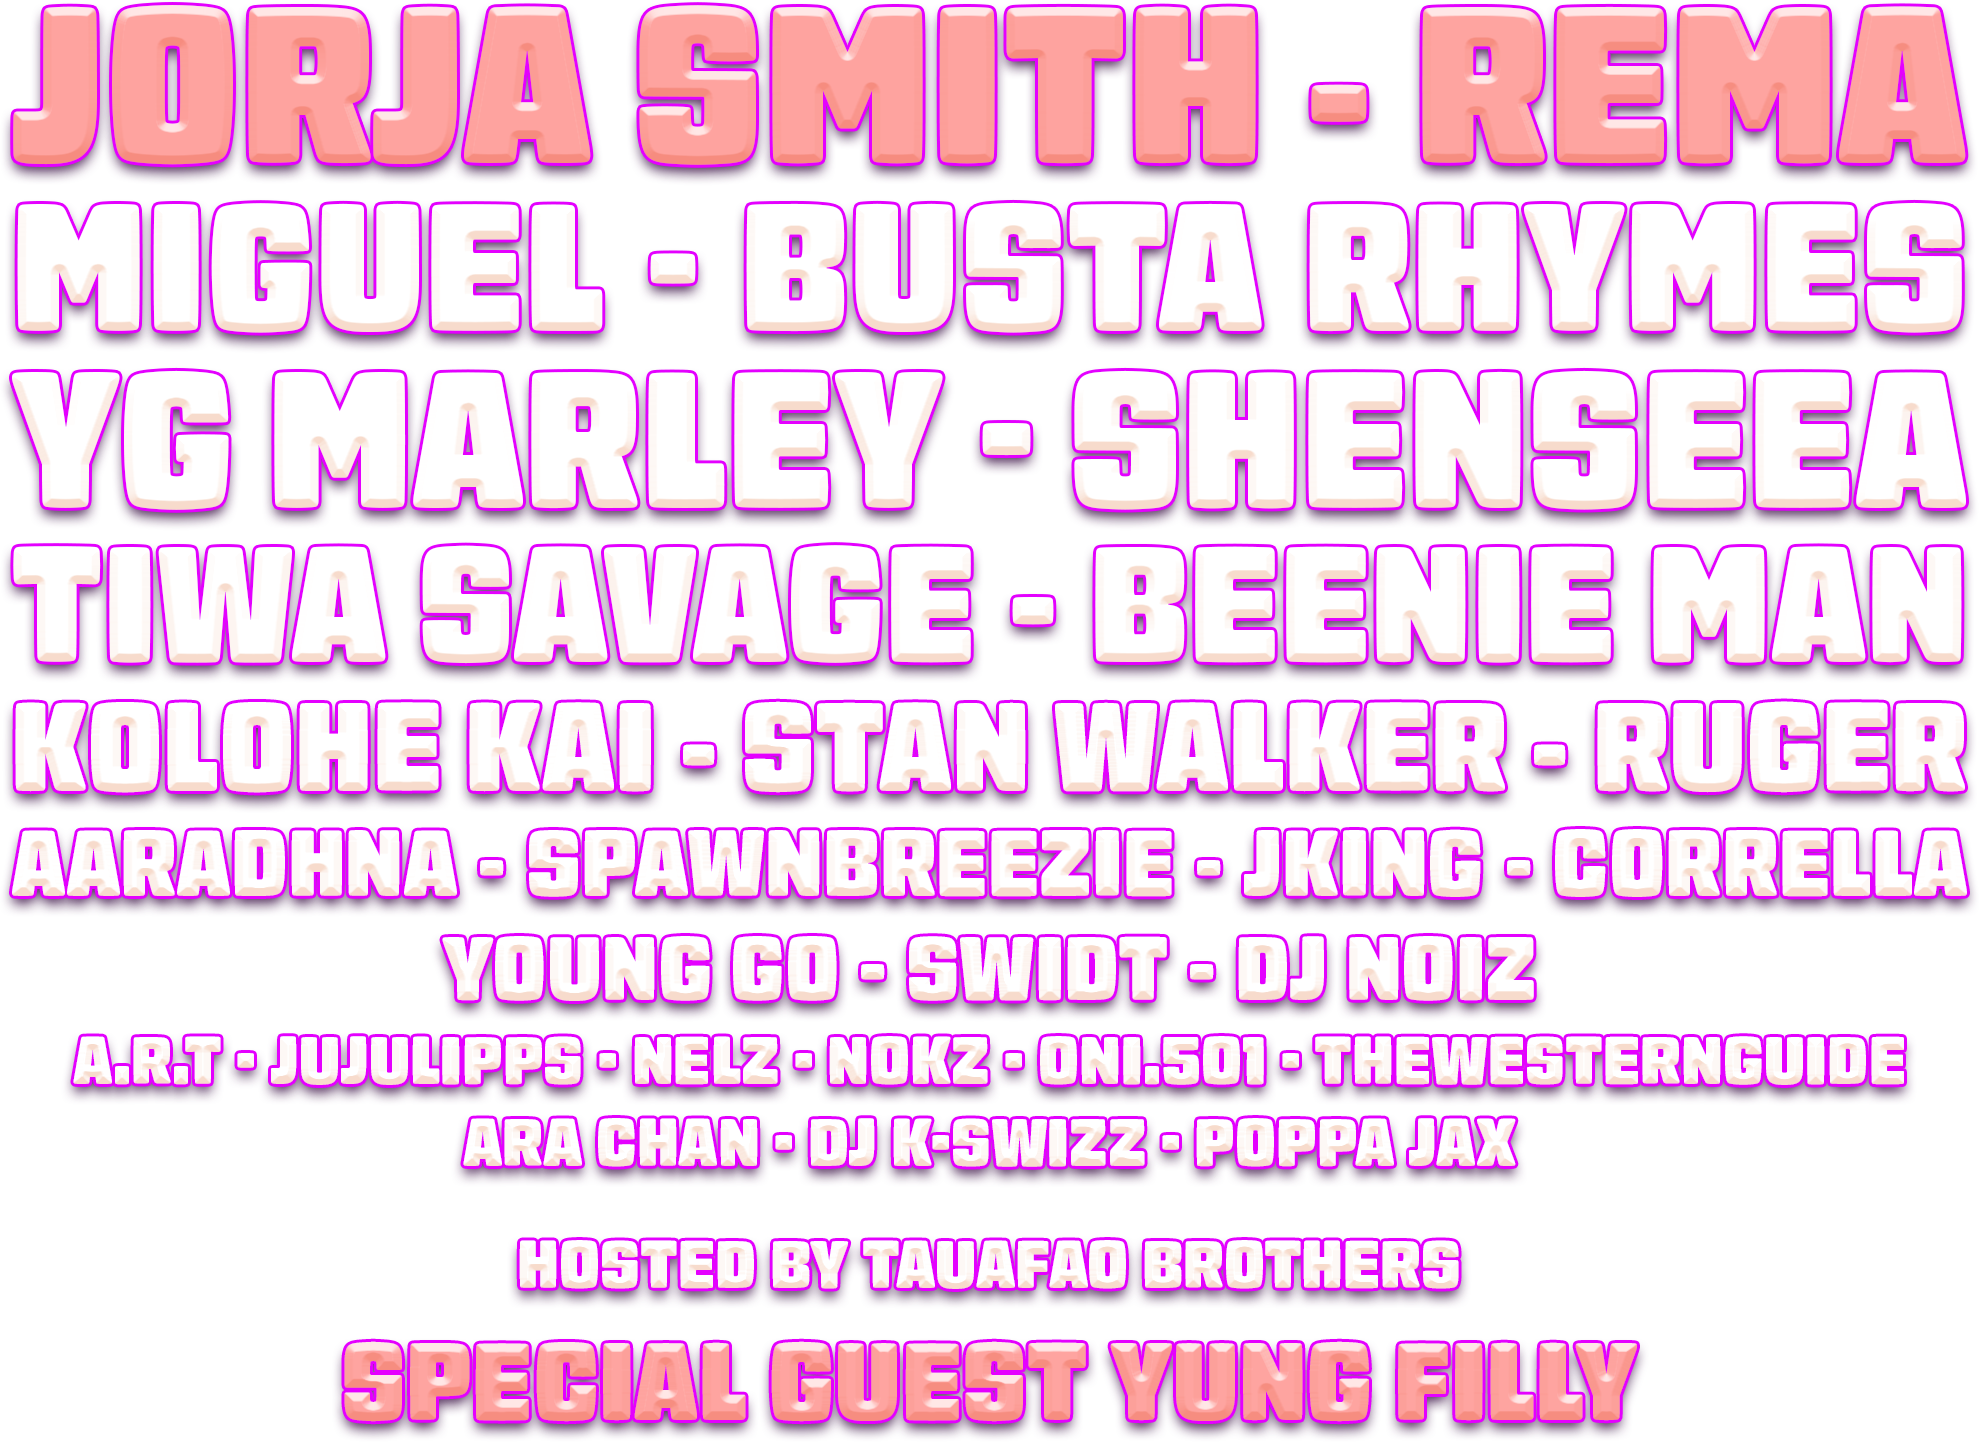 Festival Lineup: Jorja Smith, Rema, Miguel, Busta Rhymes, YG Marley, Shenseea, Tiwa Savage, Beenie Man, Kolohe Kai, Stan Walker, Ruger, Aaradhna, Spawnbreezie, JKing, Corrella, Young Go, Swidt, DJ Noiz, A.R.T, Jujulipps, Nelz, Nokz, Oni.501, TheWesternGuide, Ara Chan, DJ K-Swizz, Poppa Jax - Hosted By: Tauafao Brothers - Special Guest: Yung Filly.